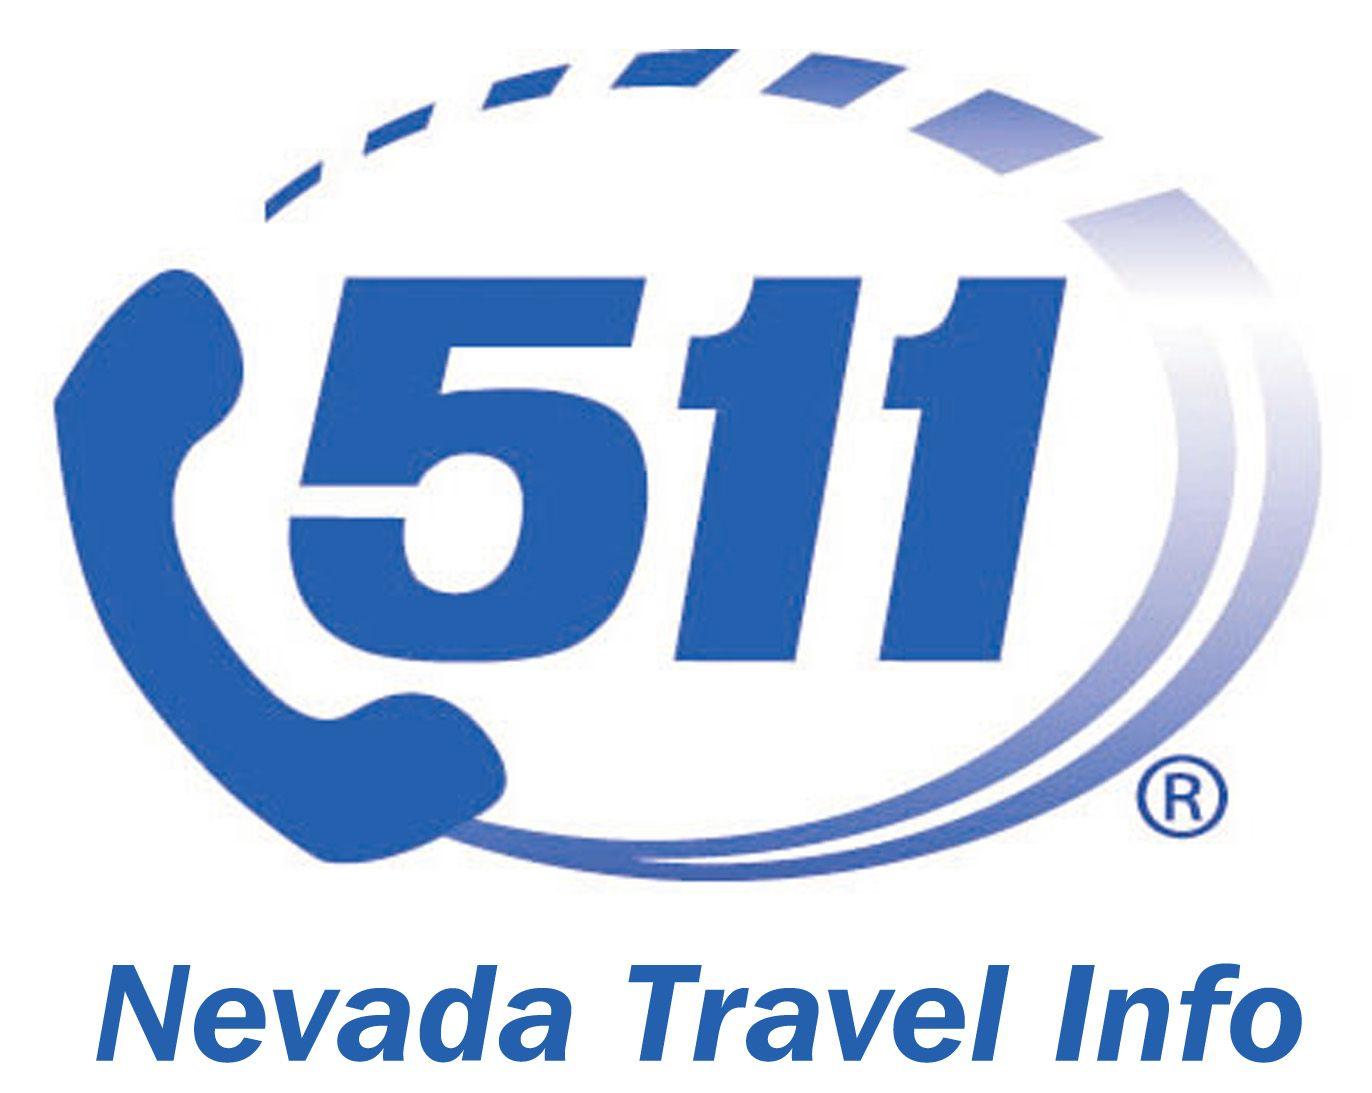 Nevada Dot Logo - Travel Info | Nevada Department of Transportation